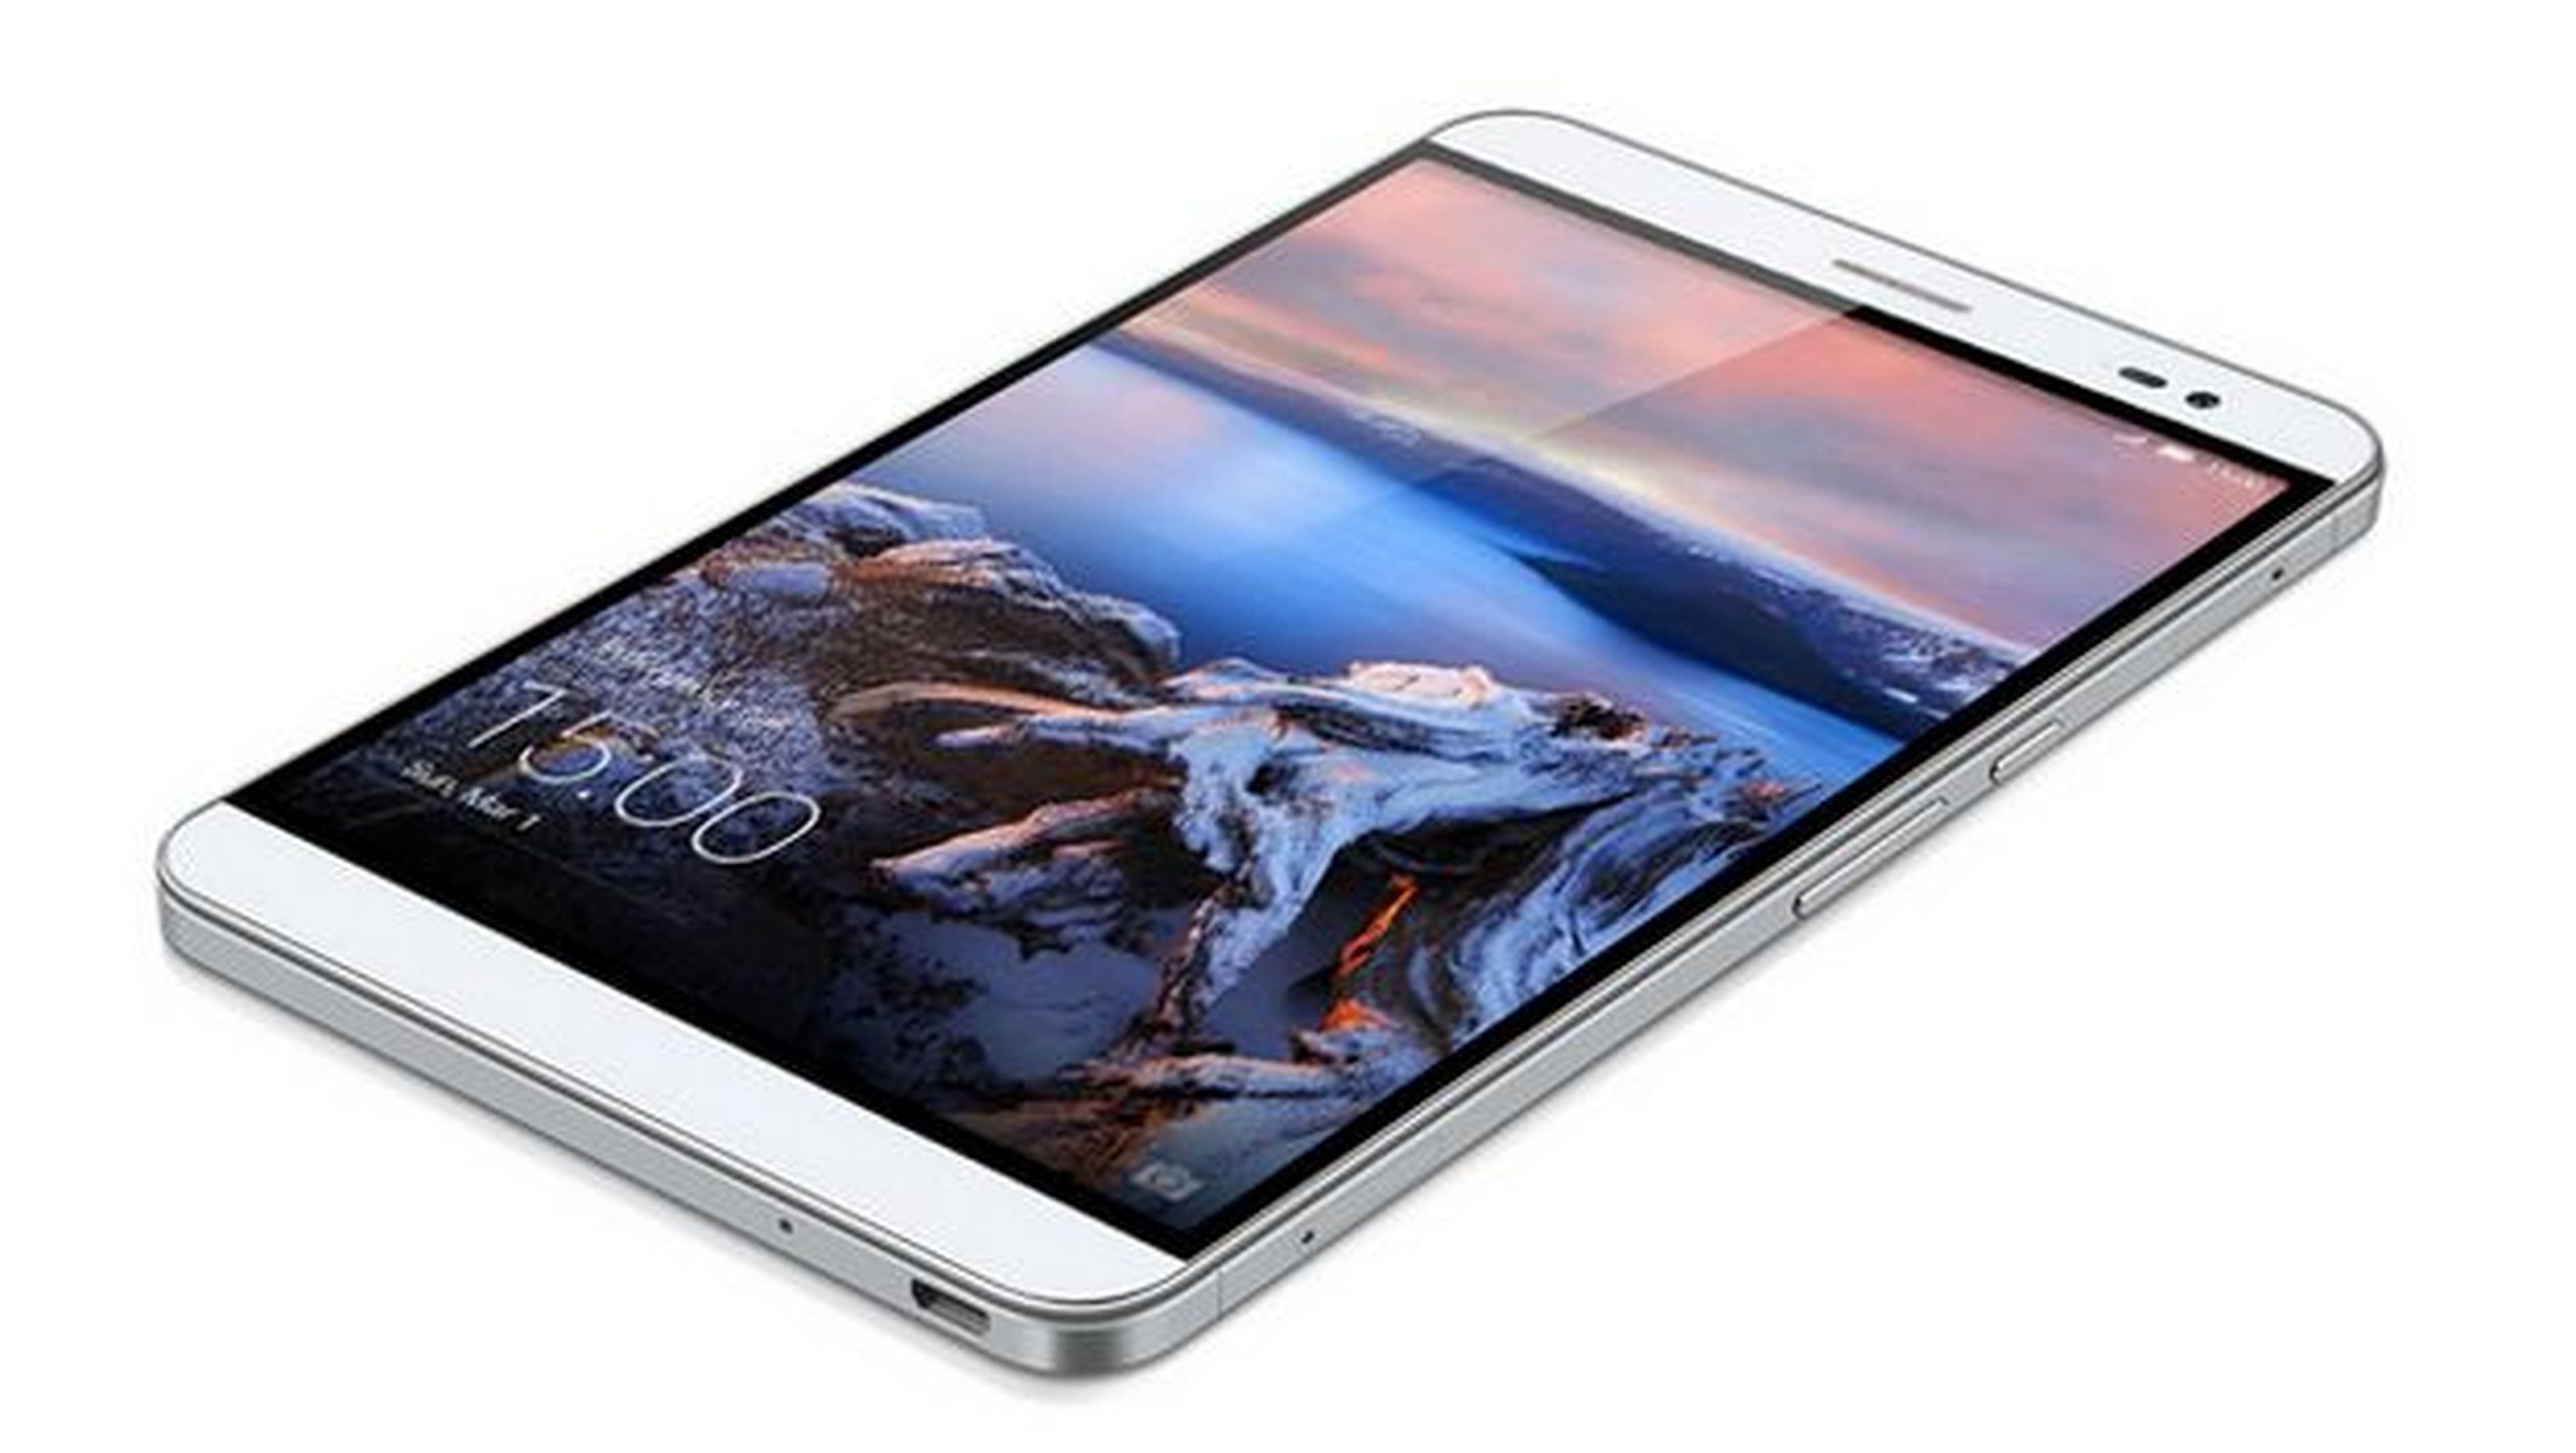 MWC 2015: Huawei Media Pad X2, tablet y teléfono